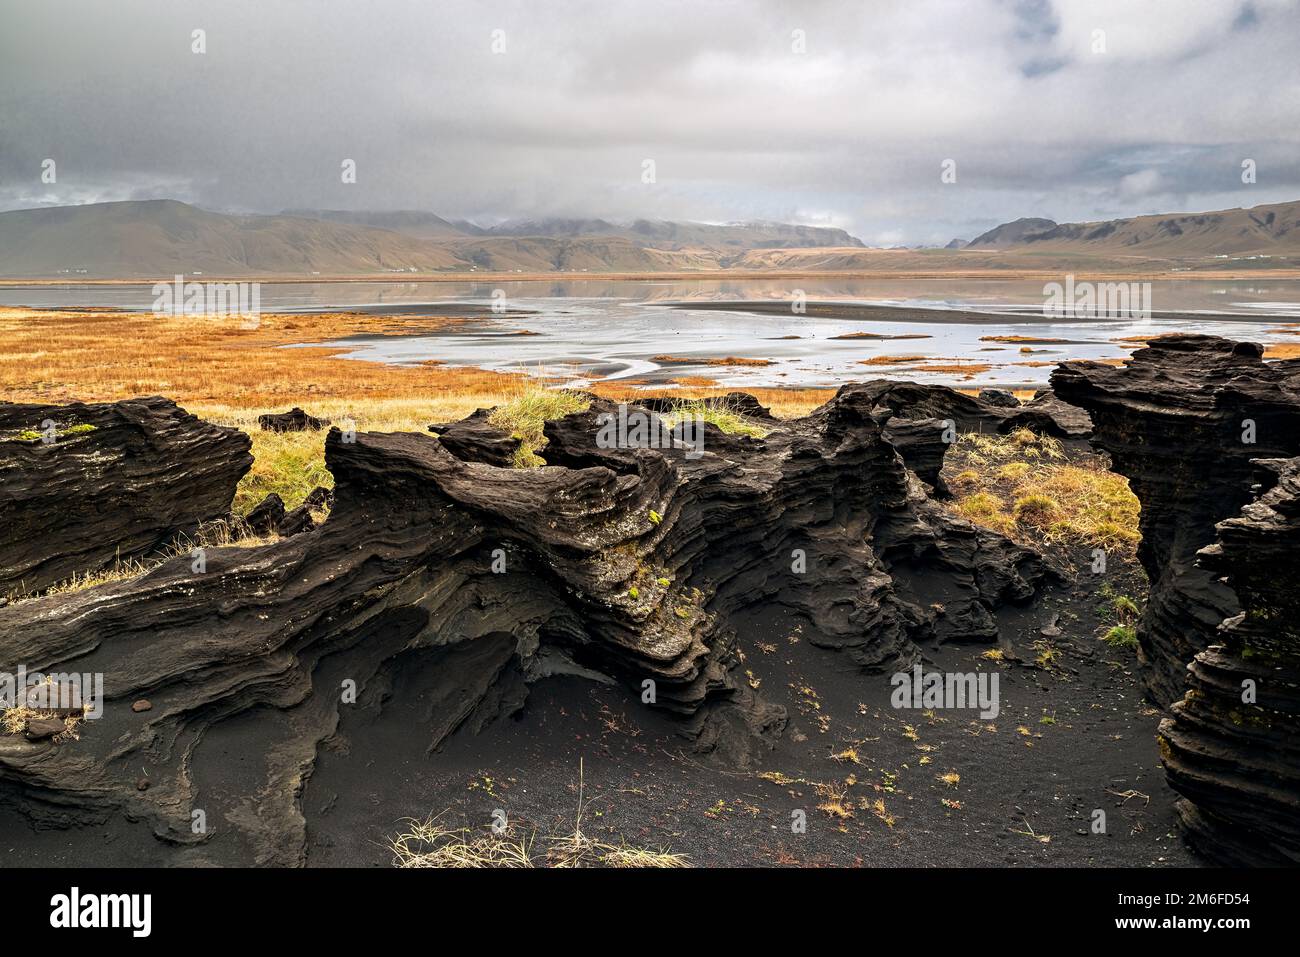 Volcanic rock formation near Dyrholaey, Iceland Stock Photo